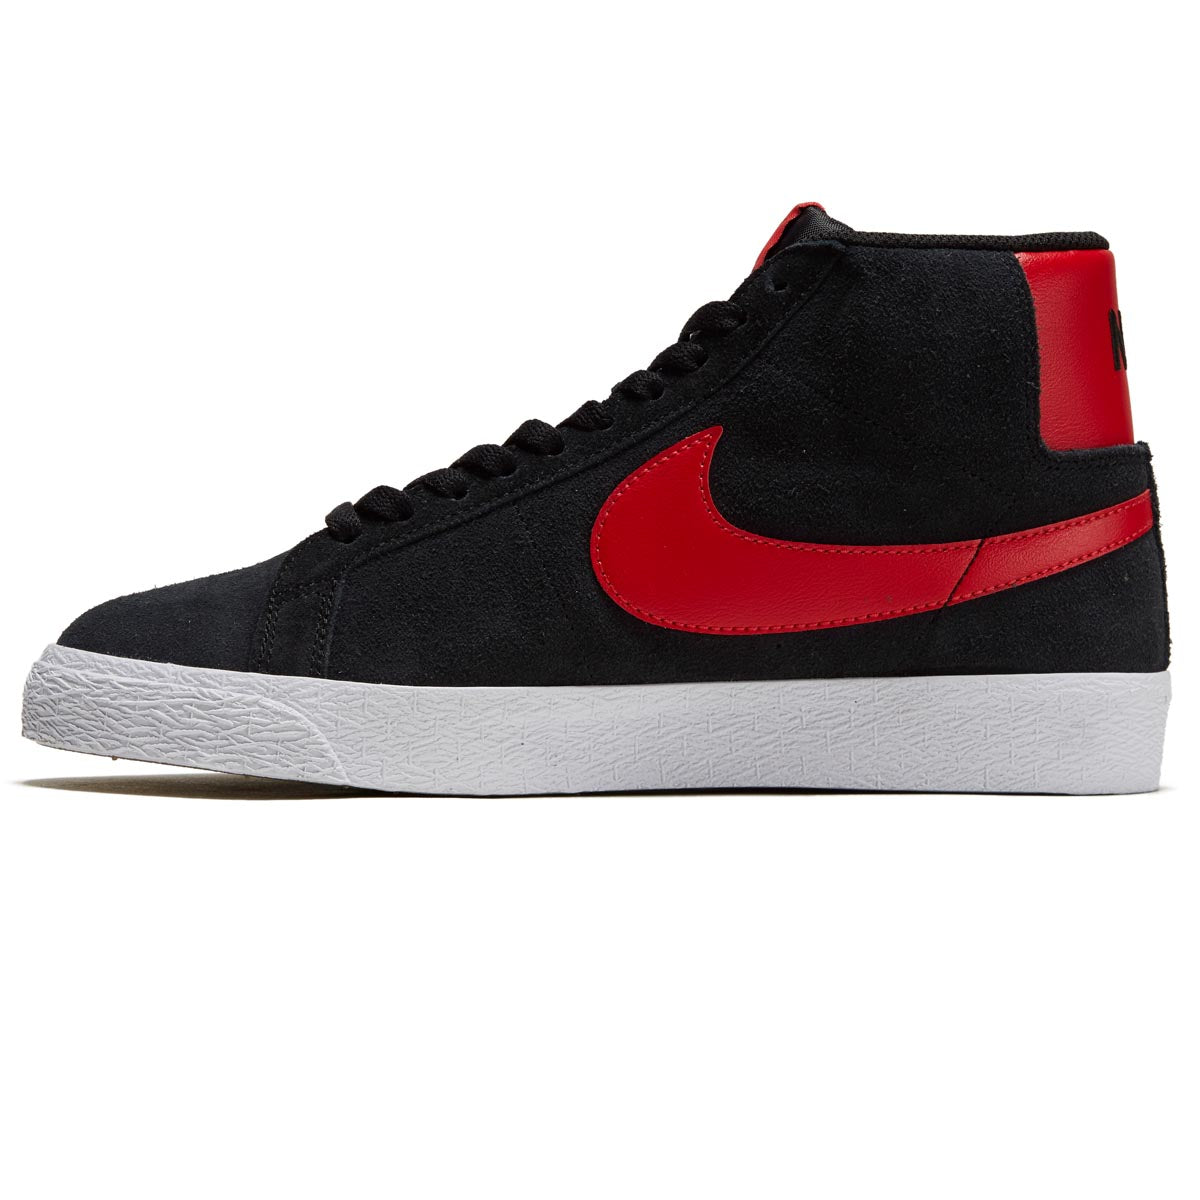 Nike SB Zoom Blazer Mid Shoes - Black/University Red/Black/White image 2